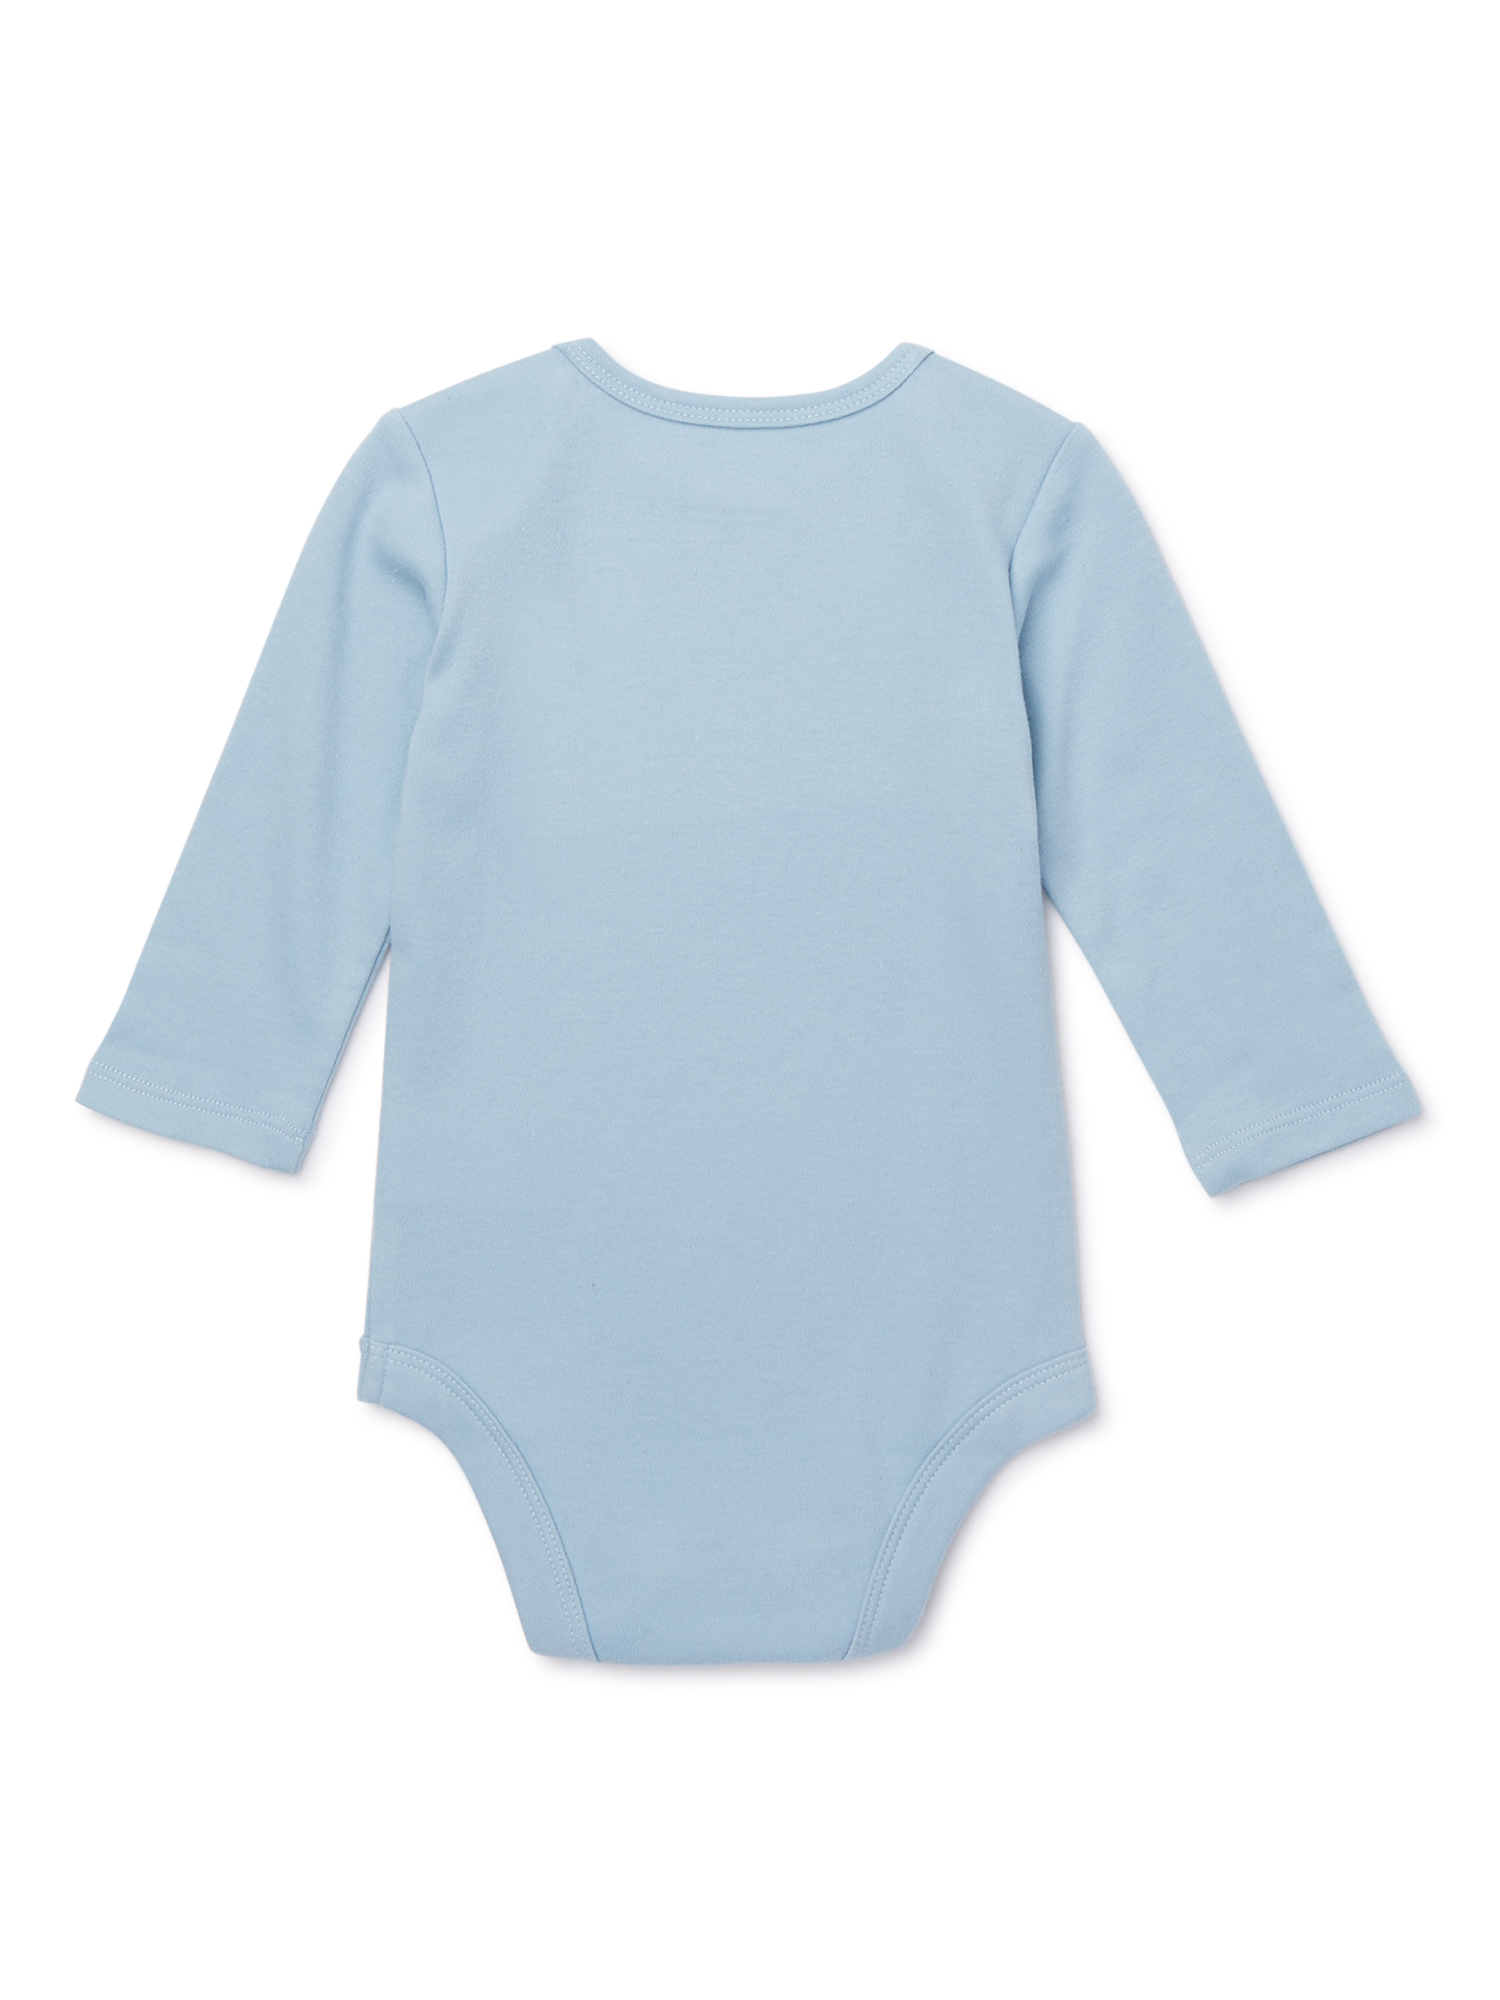 Miniville Baby Boy Blue Bodysuit, Joggers, Bib and Hat Outfit Set, 4 ...